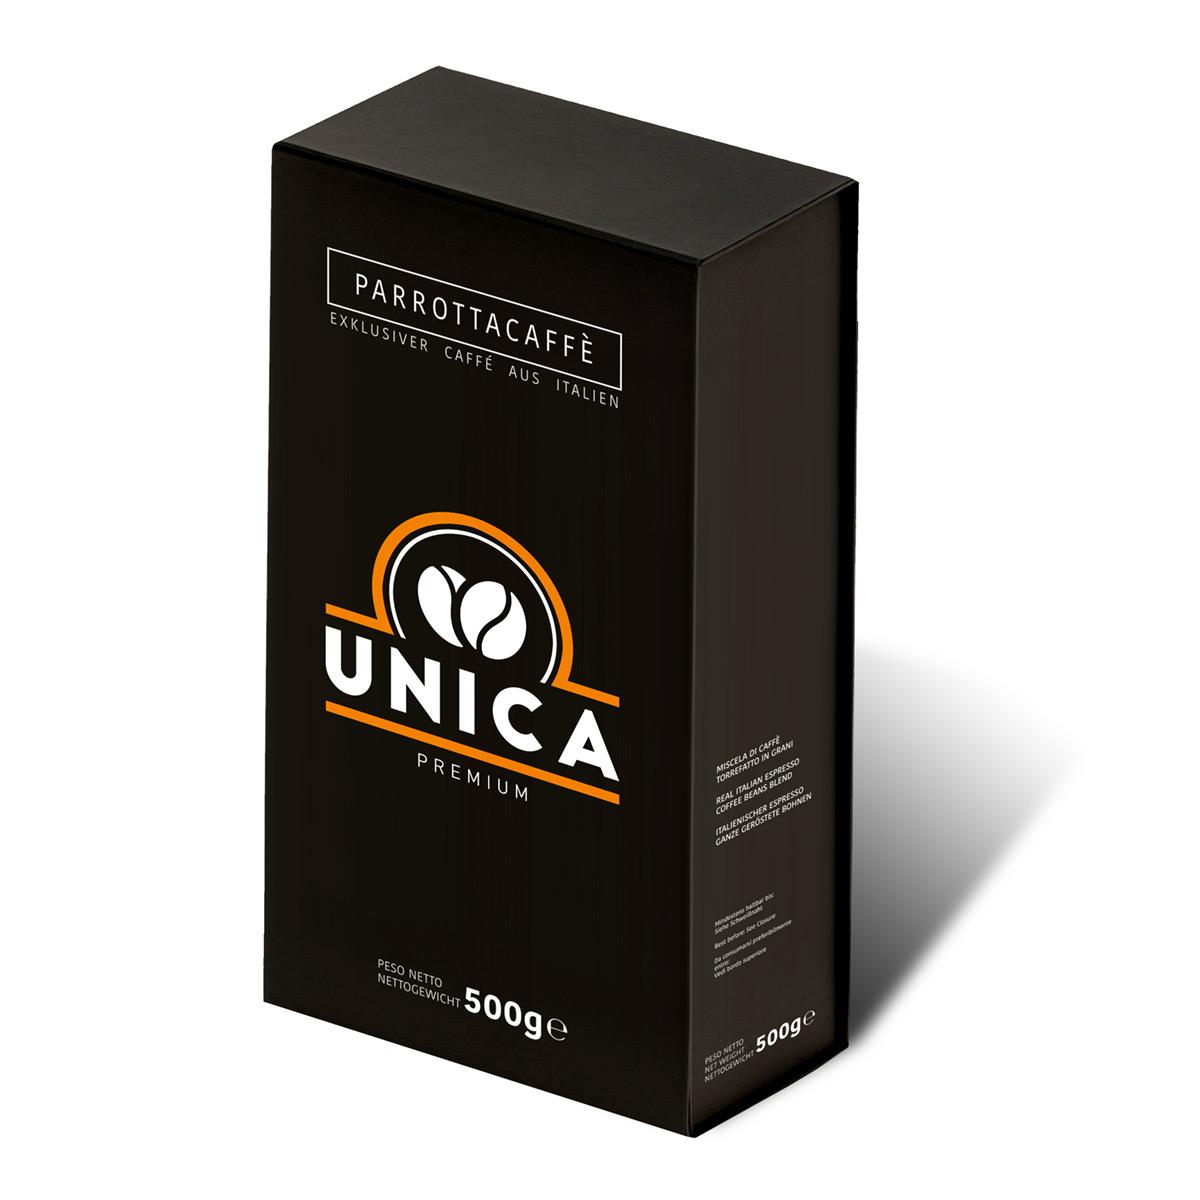 Parrottacaffe Unica